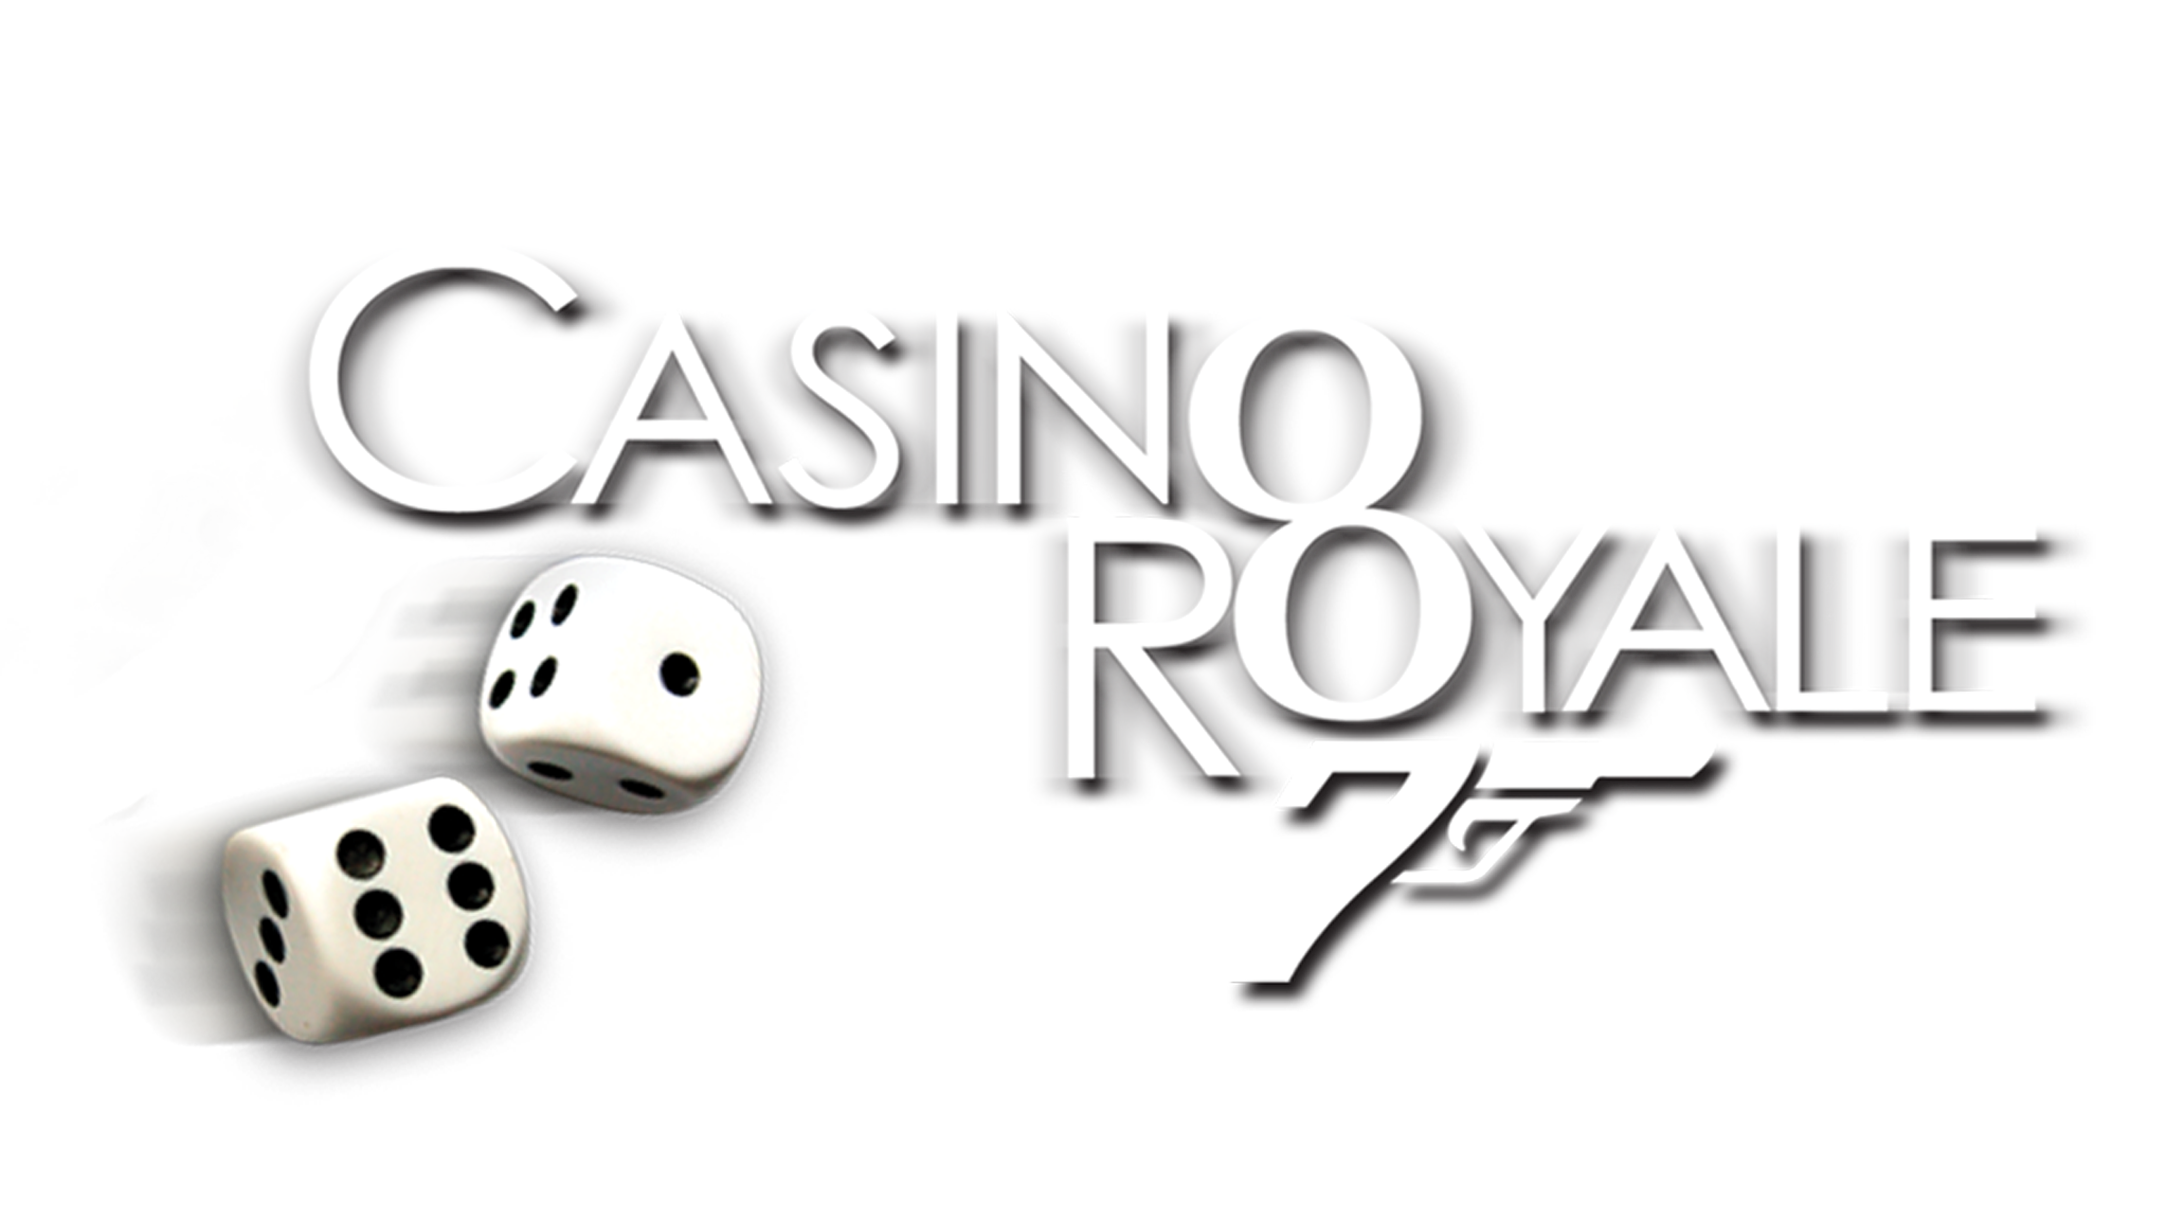 casino royale logo png